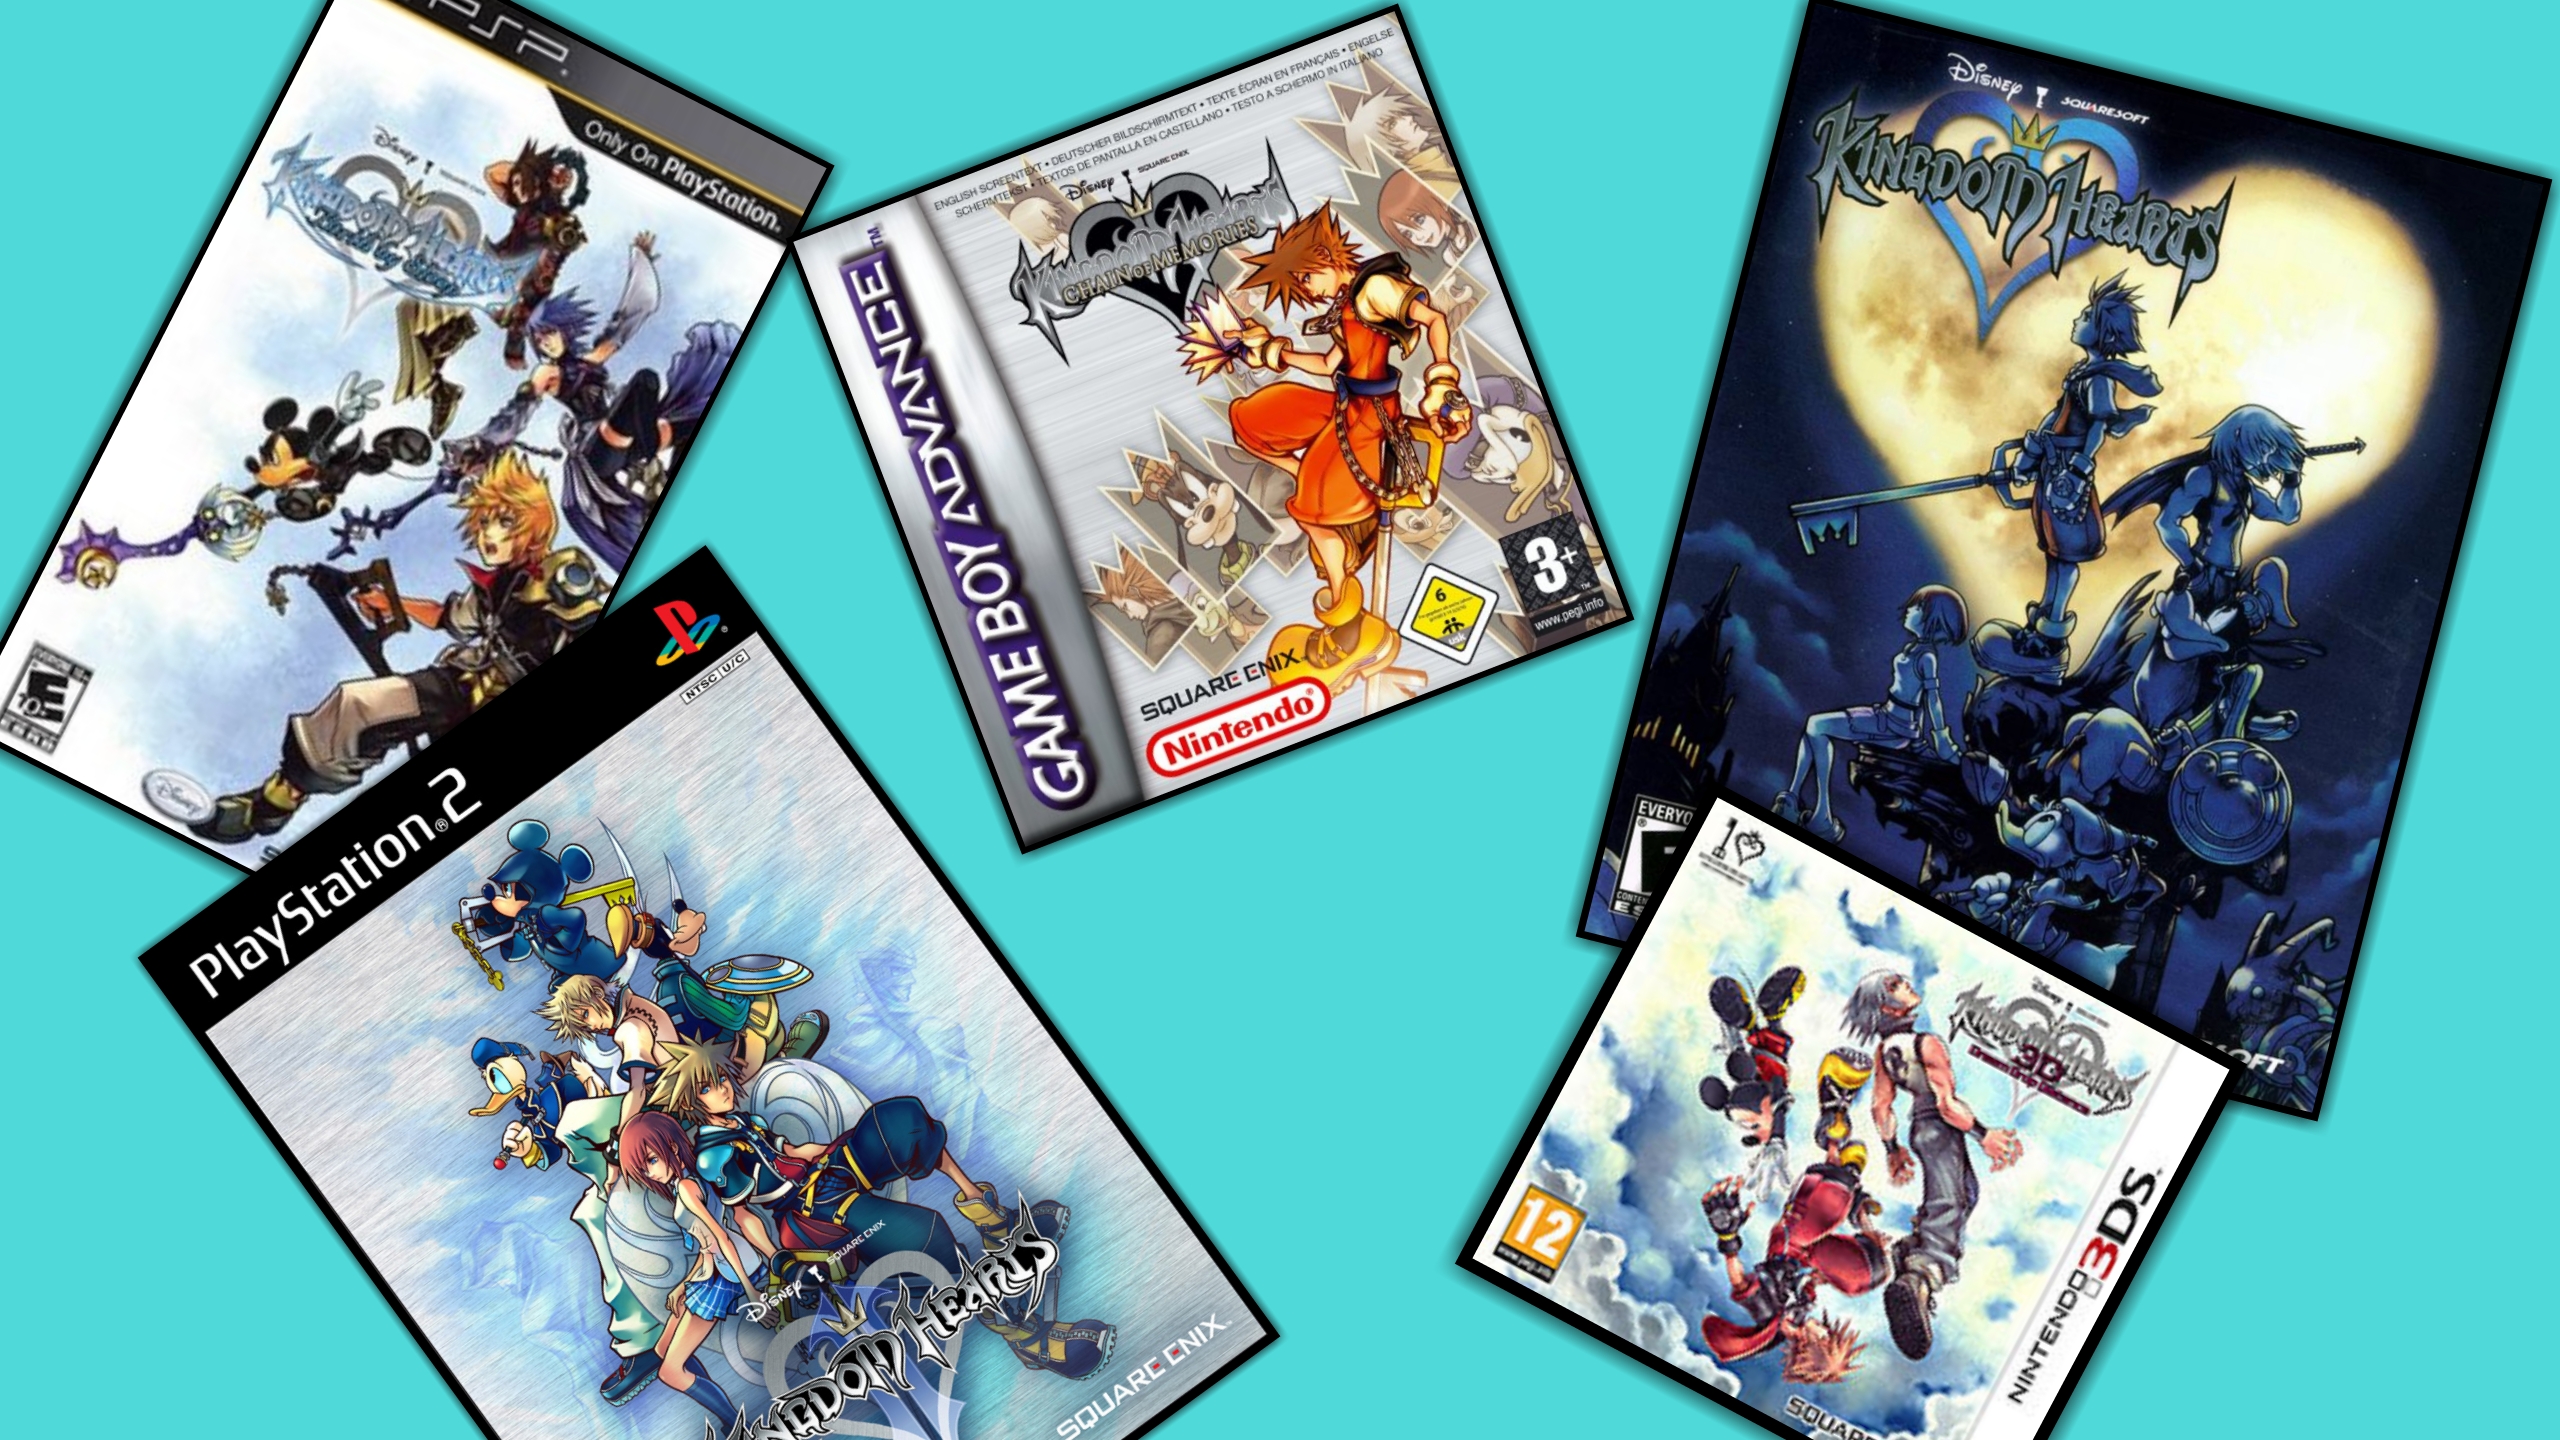 Best Kingdom Hearts Game